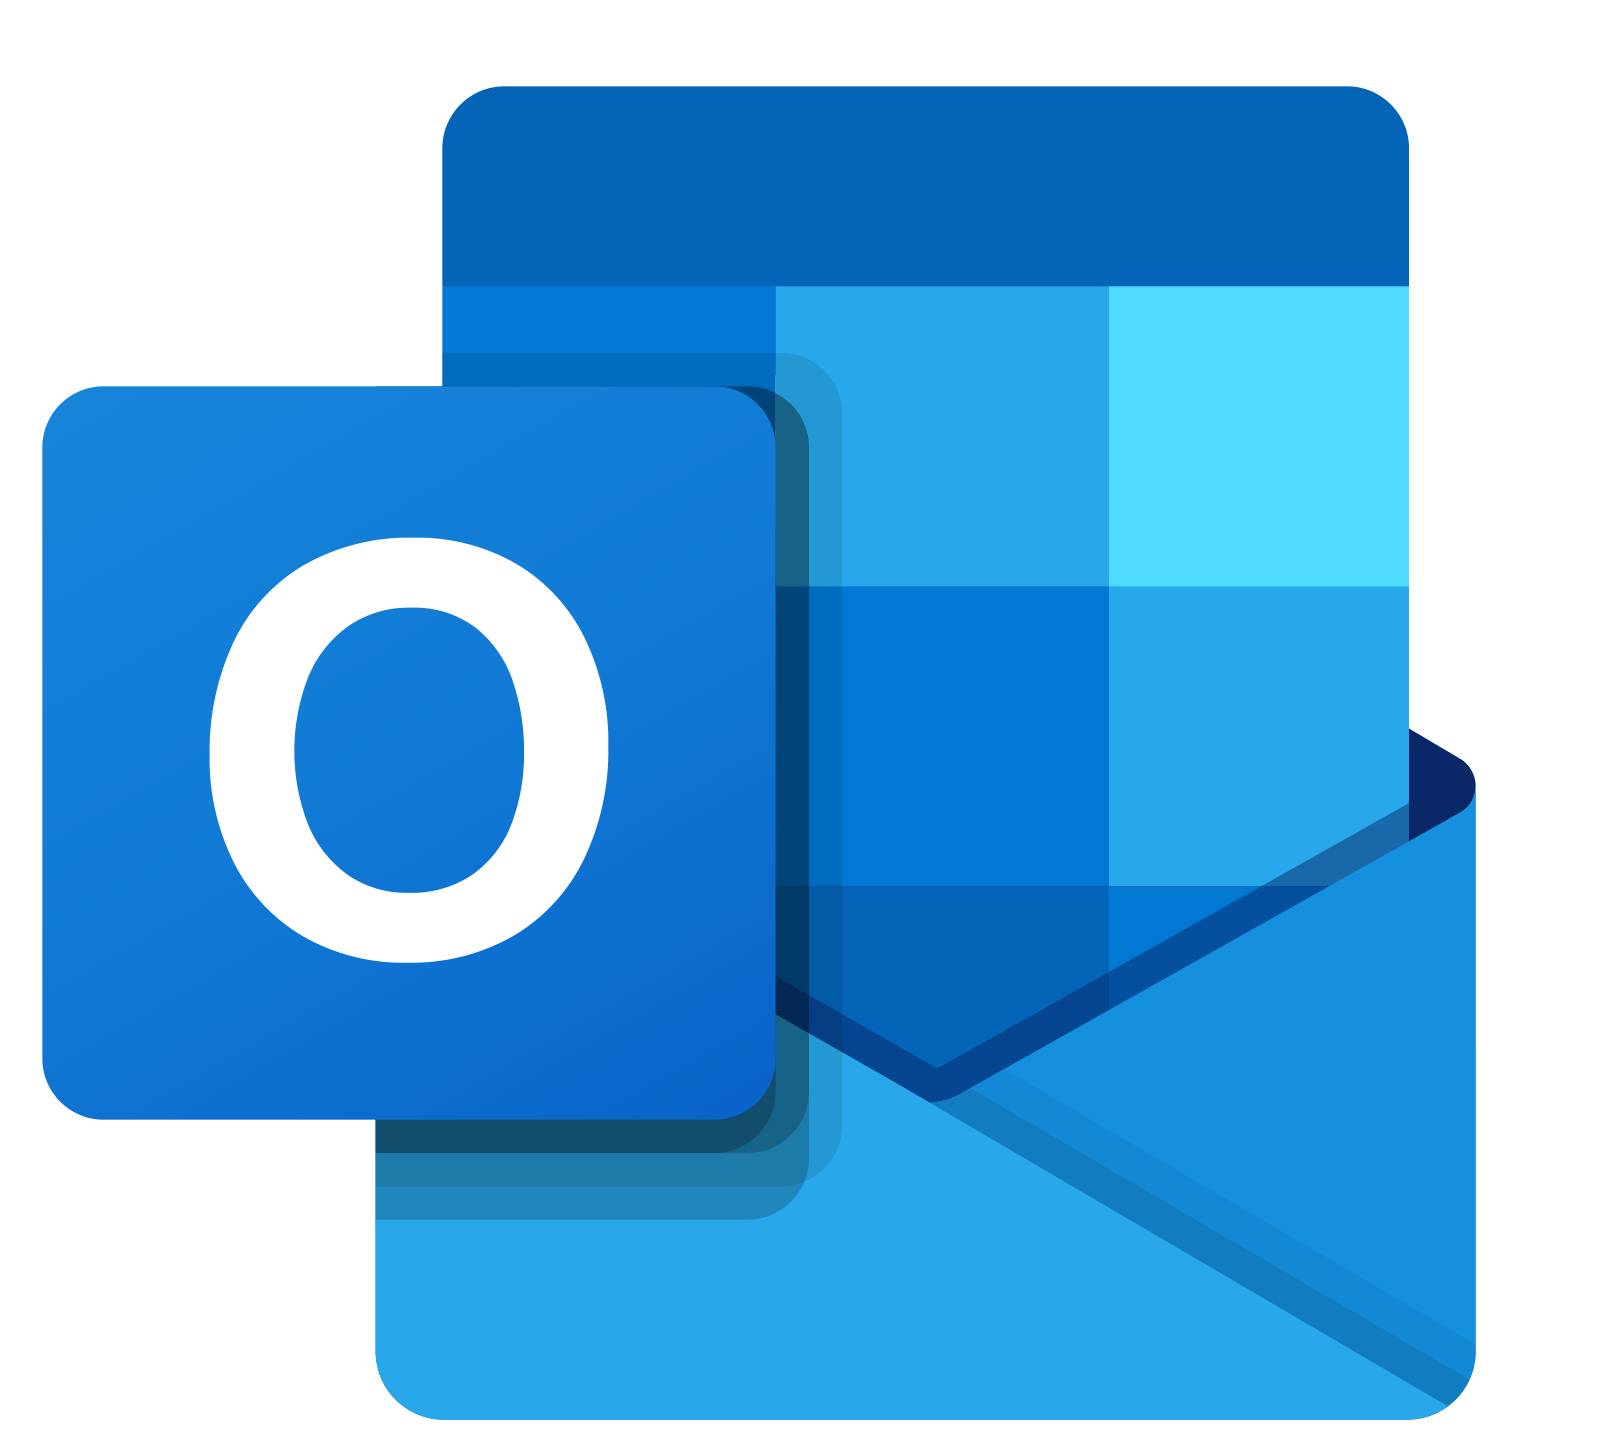 Microsoft_Outlook-Logo.wine